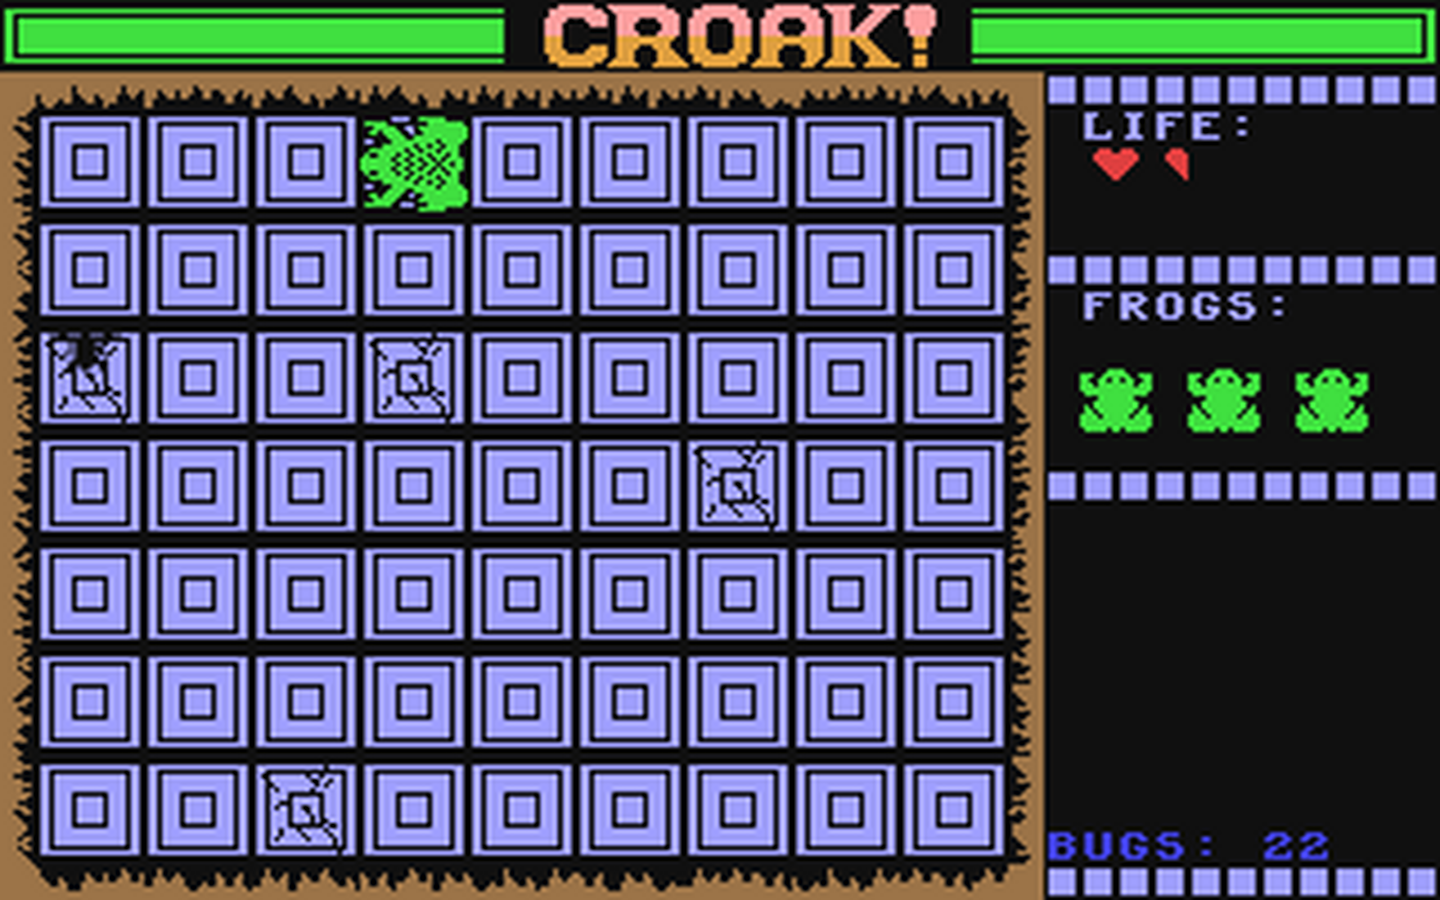 C64 GameBase Croak! Loadstar/J_&_F_Publishing,_Inc. 1996